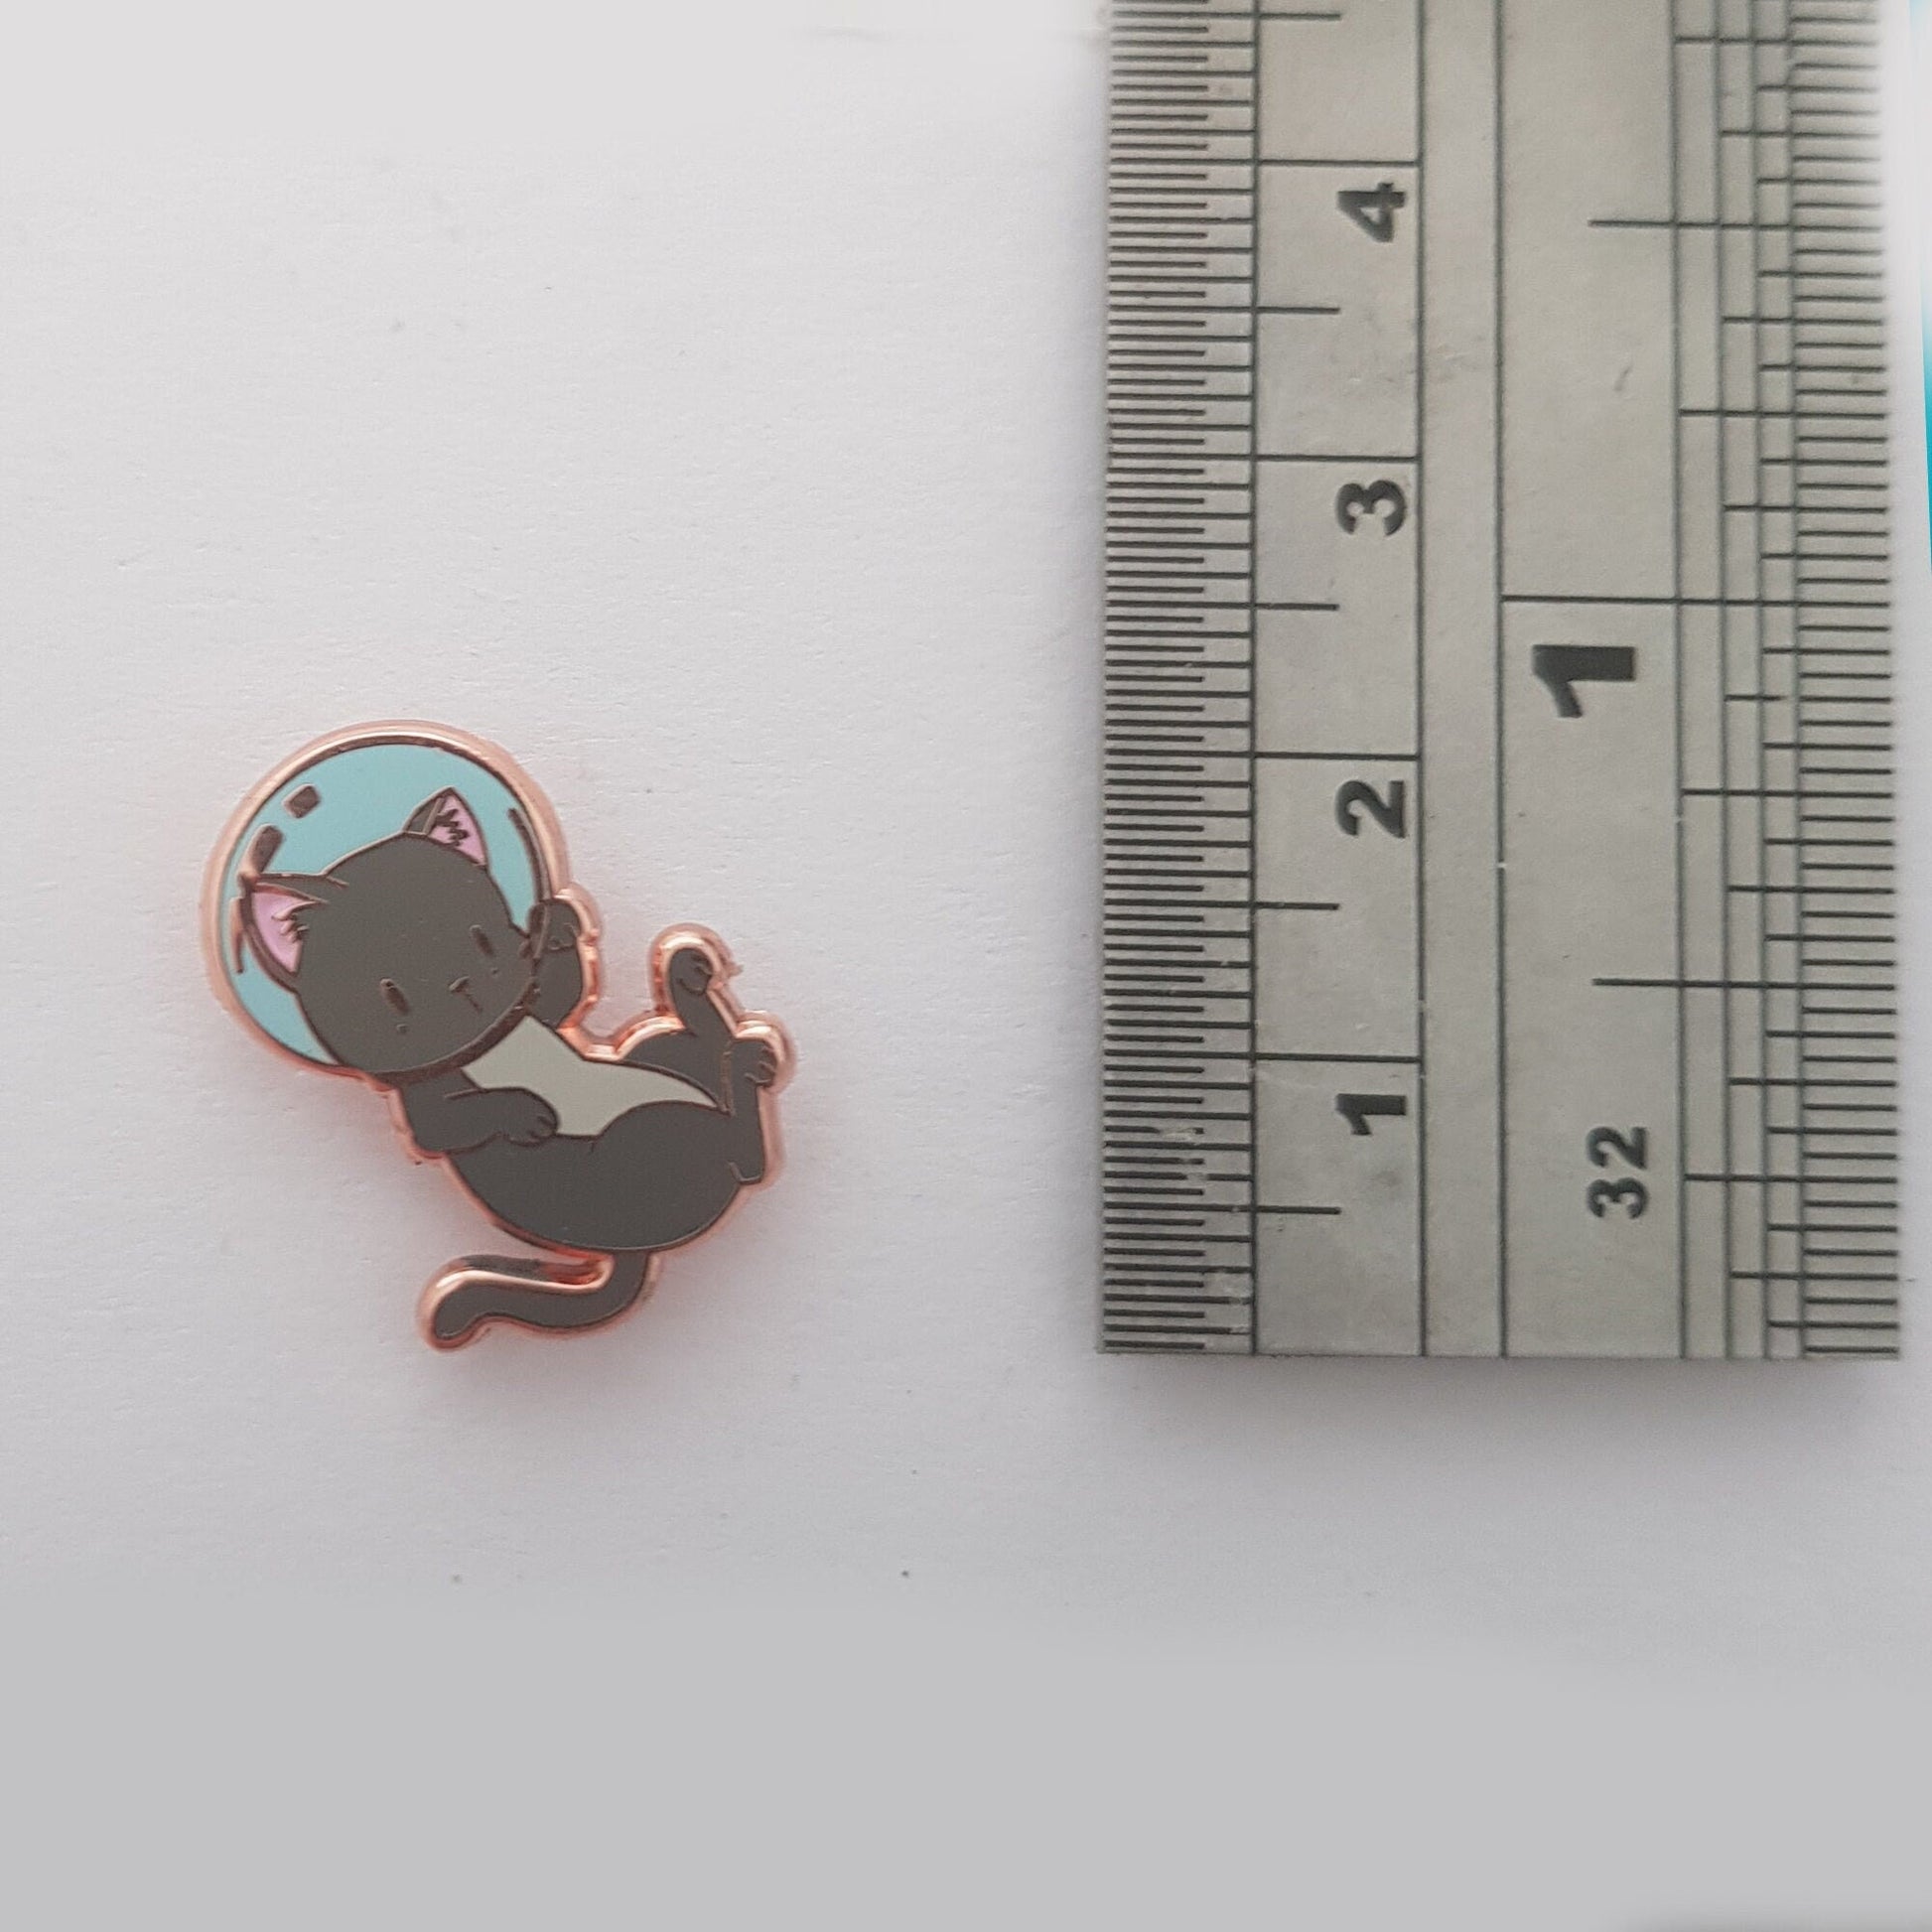 Space Kitty - Small Enamel Pin (Cosmo Kitty Lapel Pin, Kawaii Cat, Hard Enamel Pin), Pins, Brooches & Lapel Pins